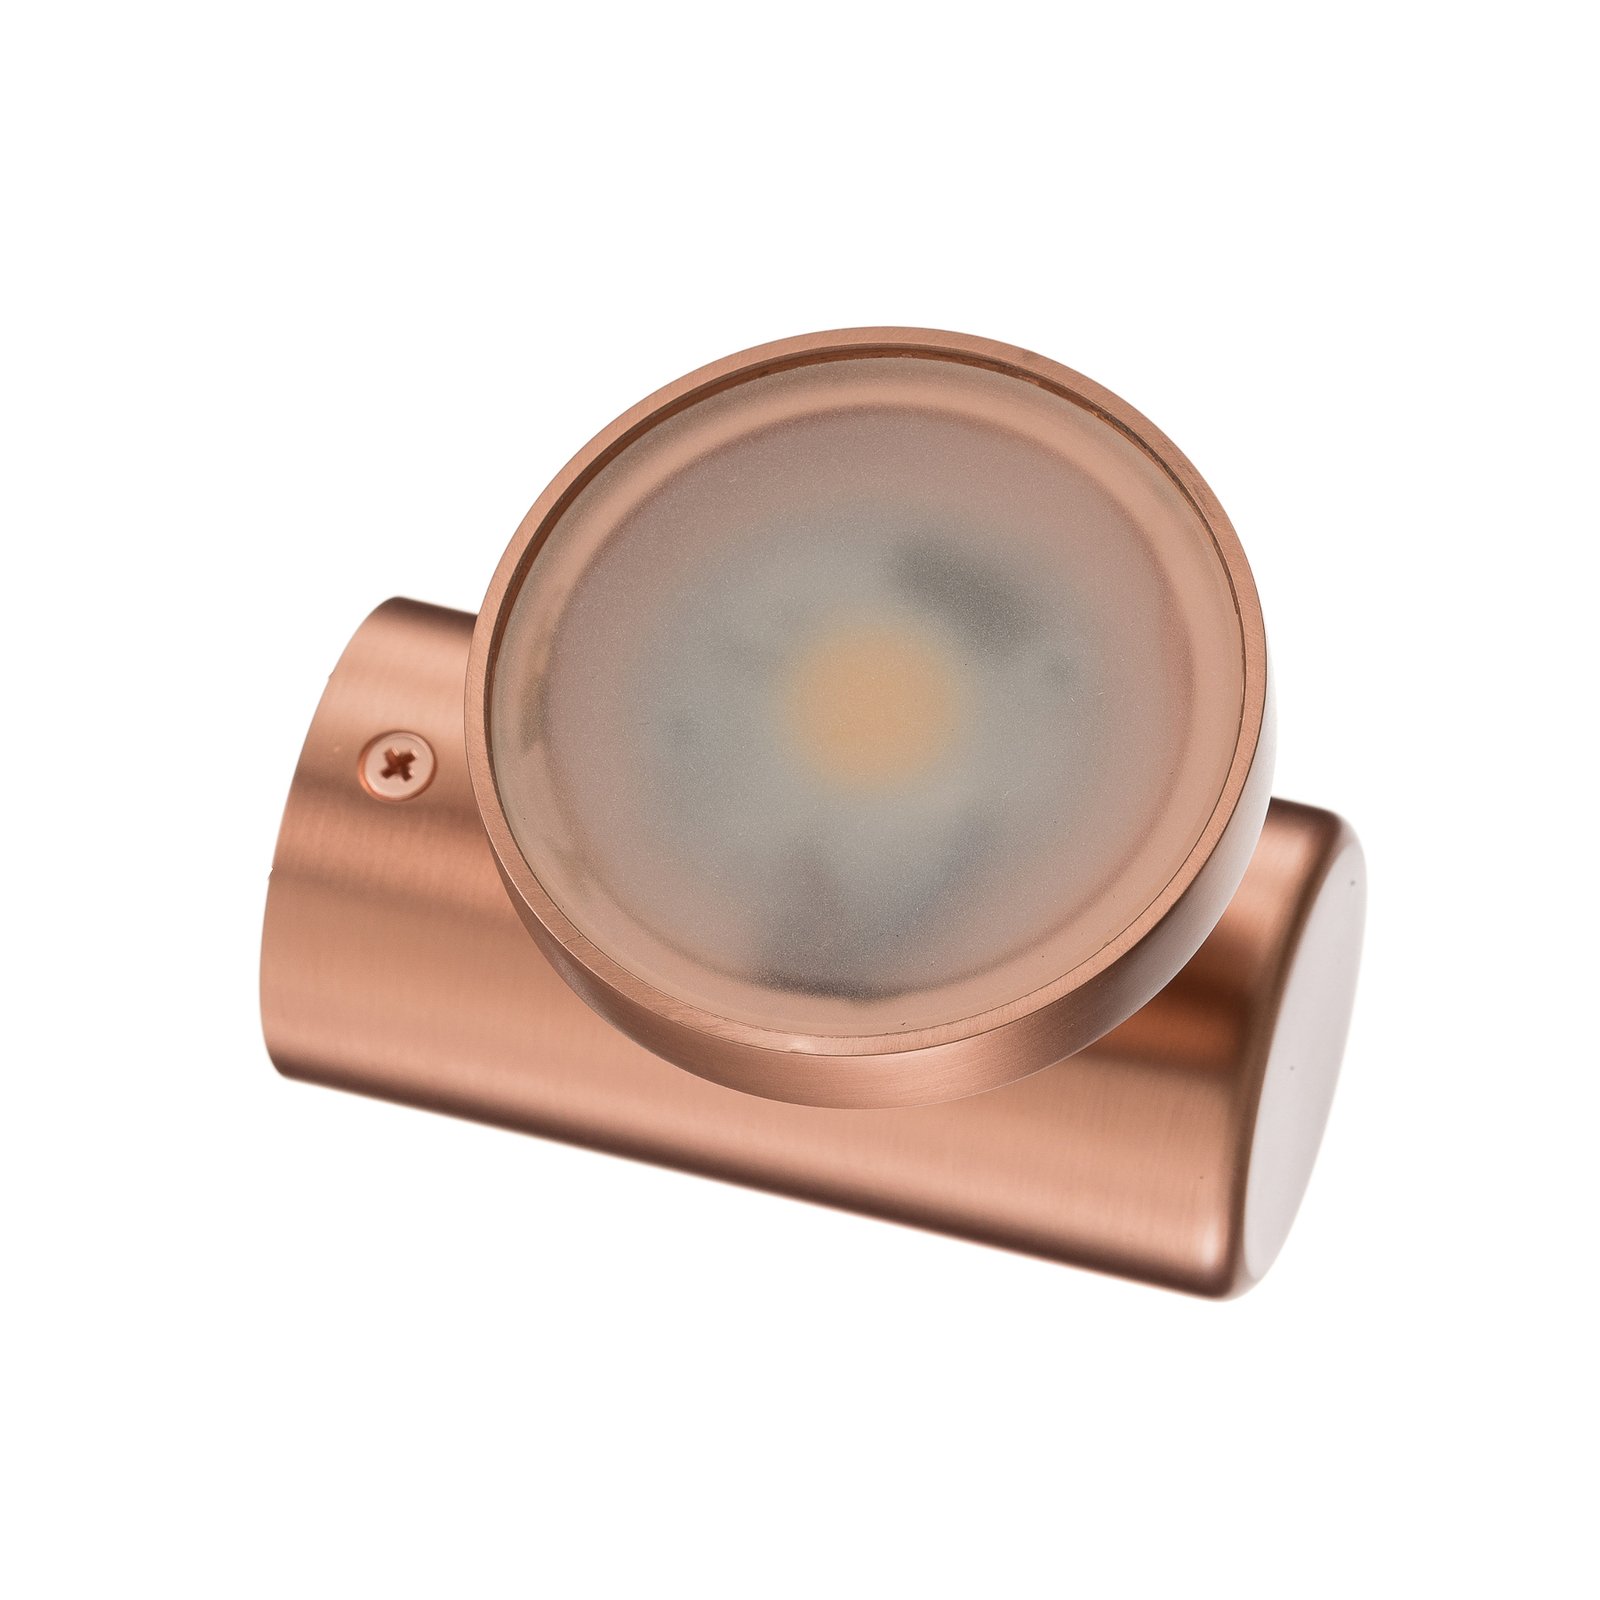 Key LED wall light, one-bulb, matt copper